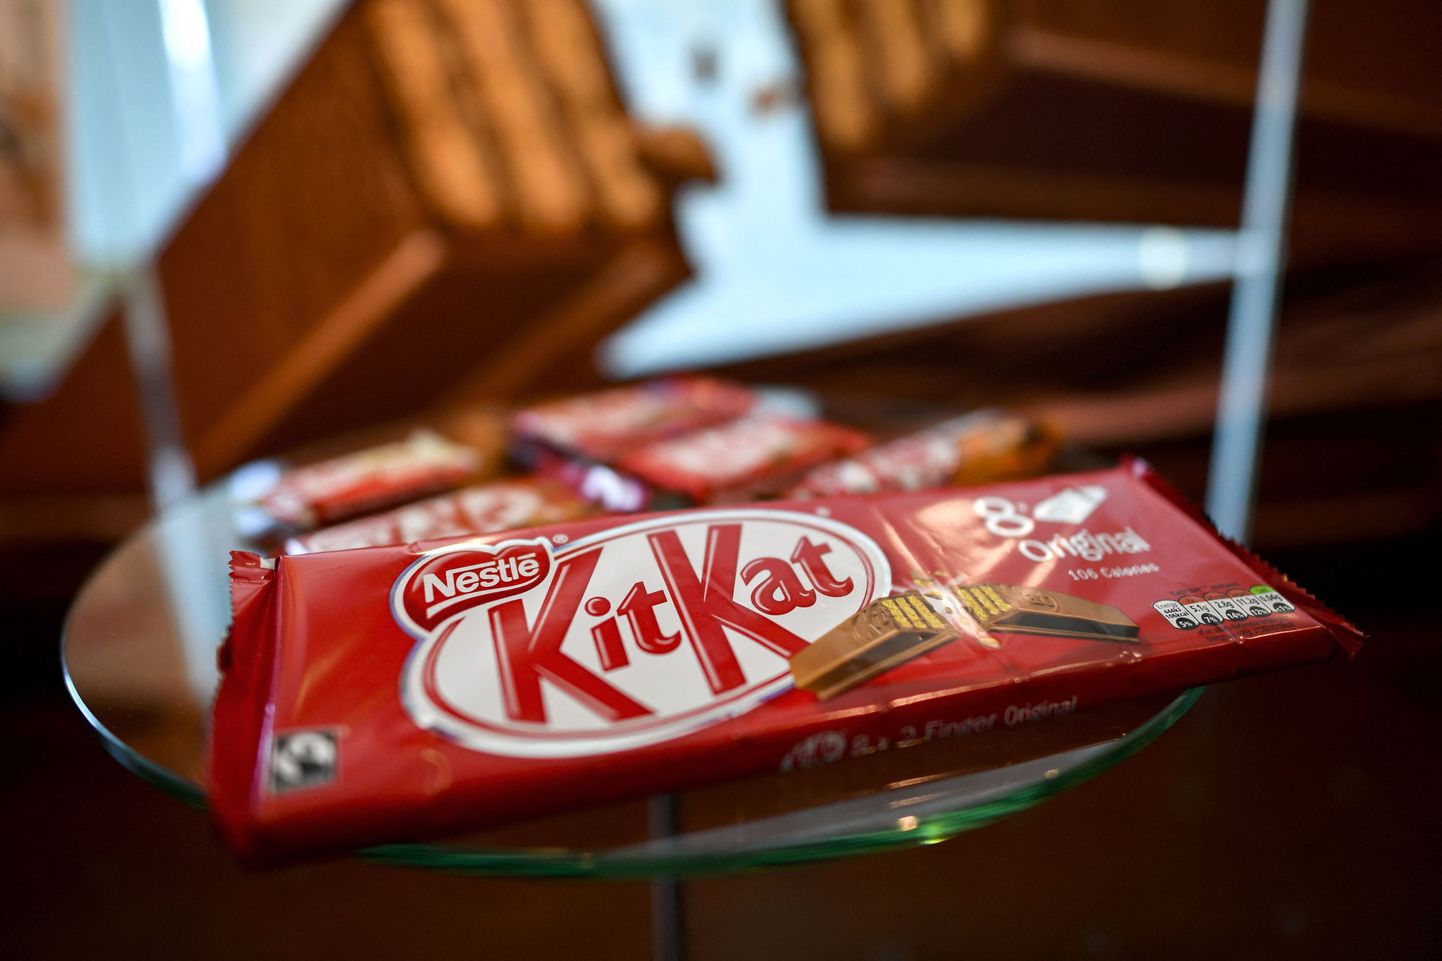 KitKat.